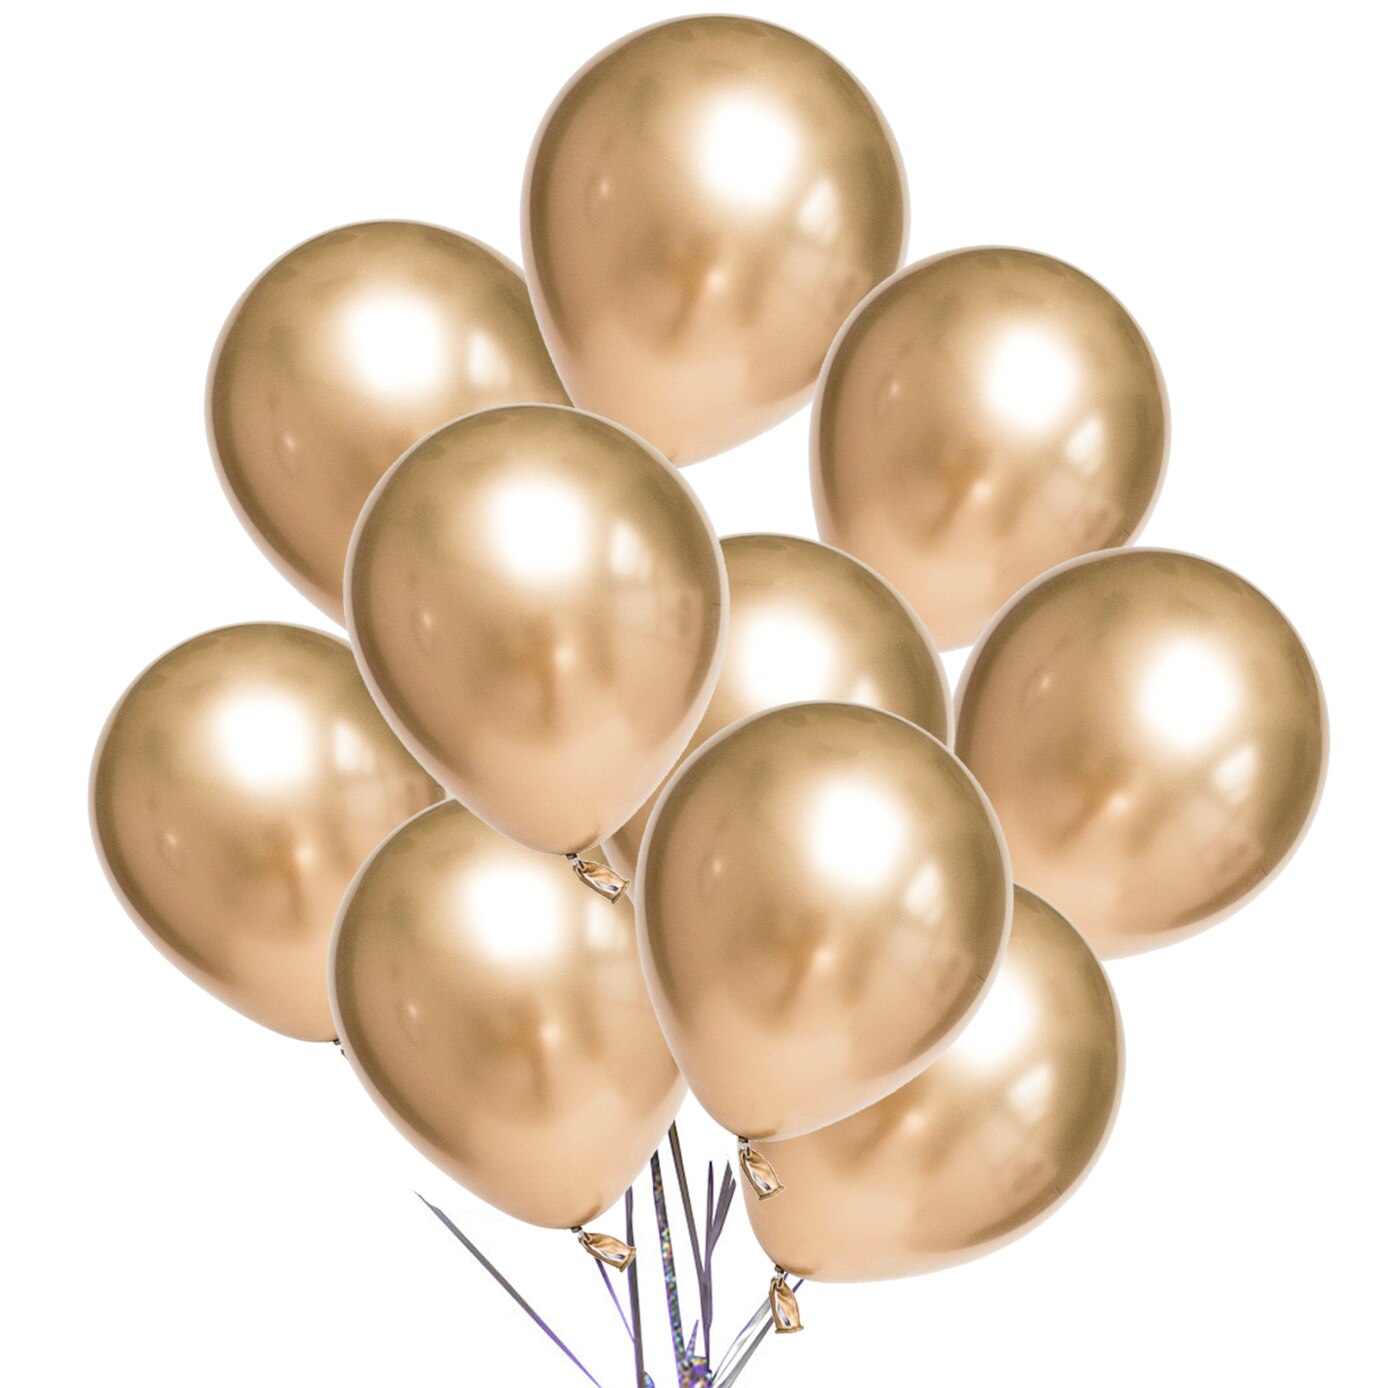 Lyserød guld ballon krans gør guld krom ballon fødselsdage bryllup baby shower fester fest dekorationer: 10 stk krom guld